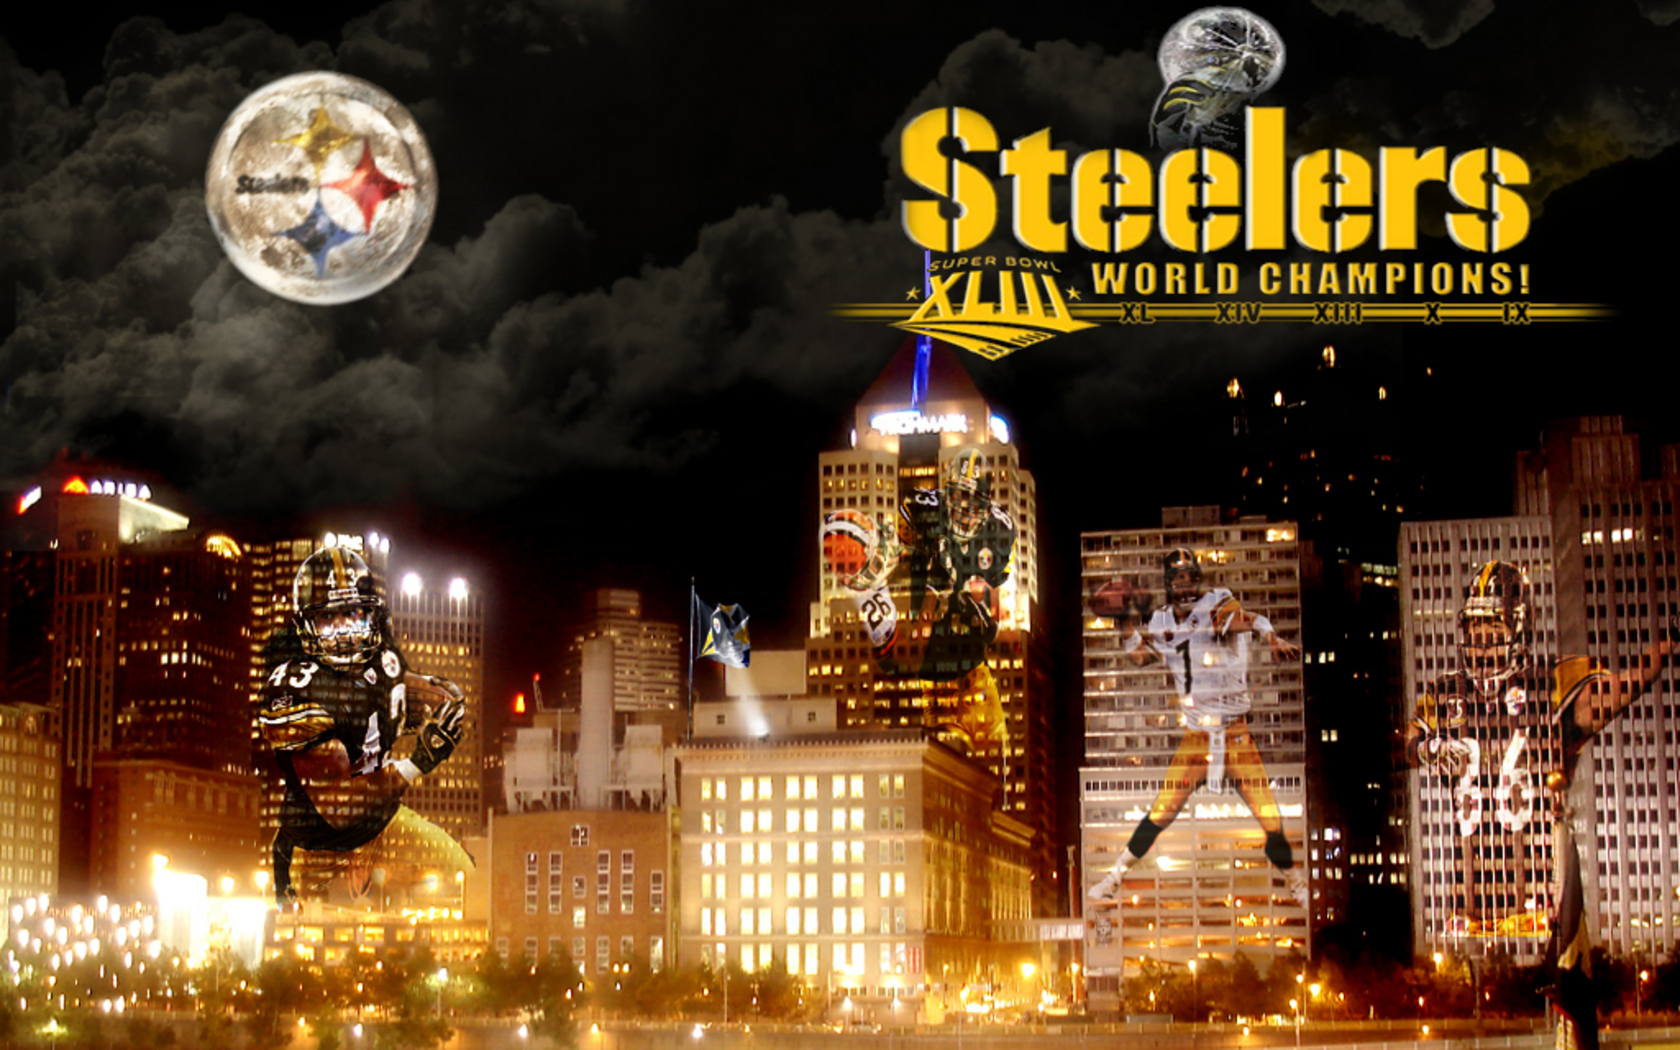 Enjoy this new Pittsburgh Steelers desktop background